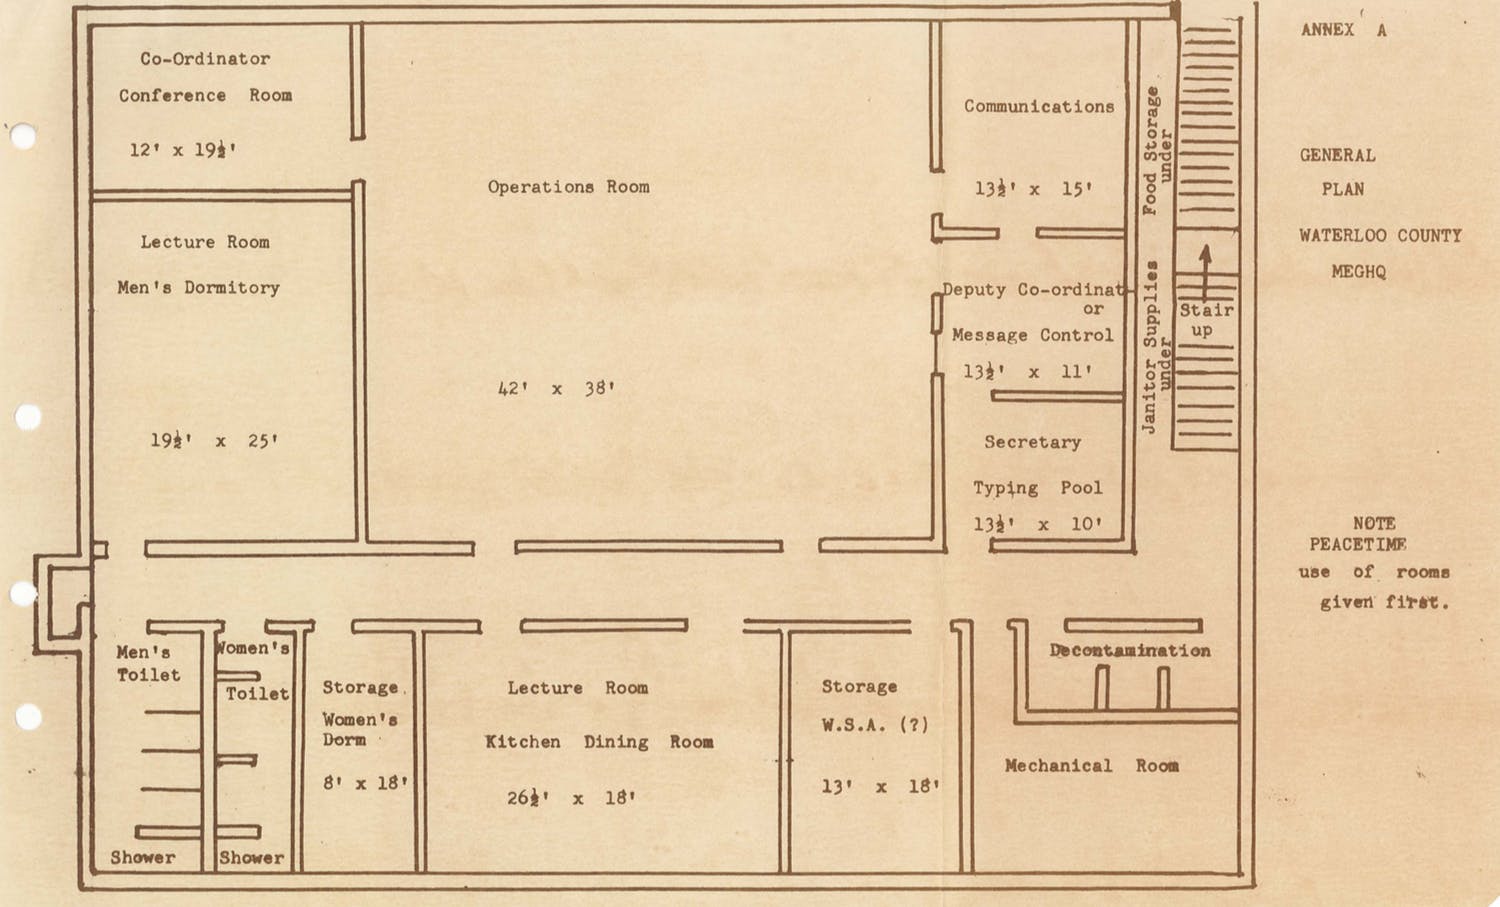 Internal floor plan of the MEGHQ